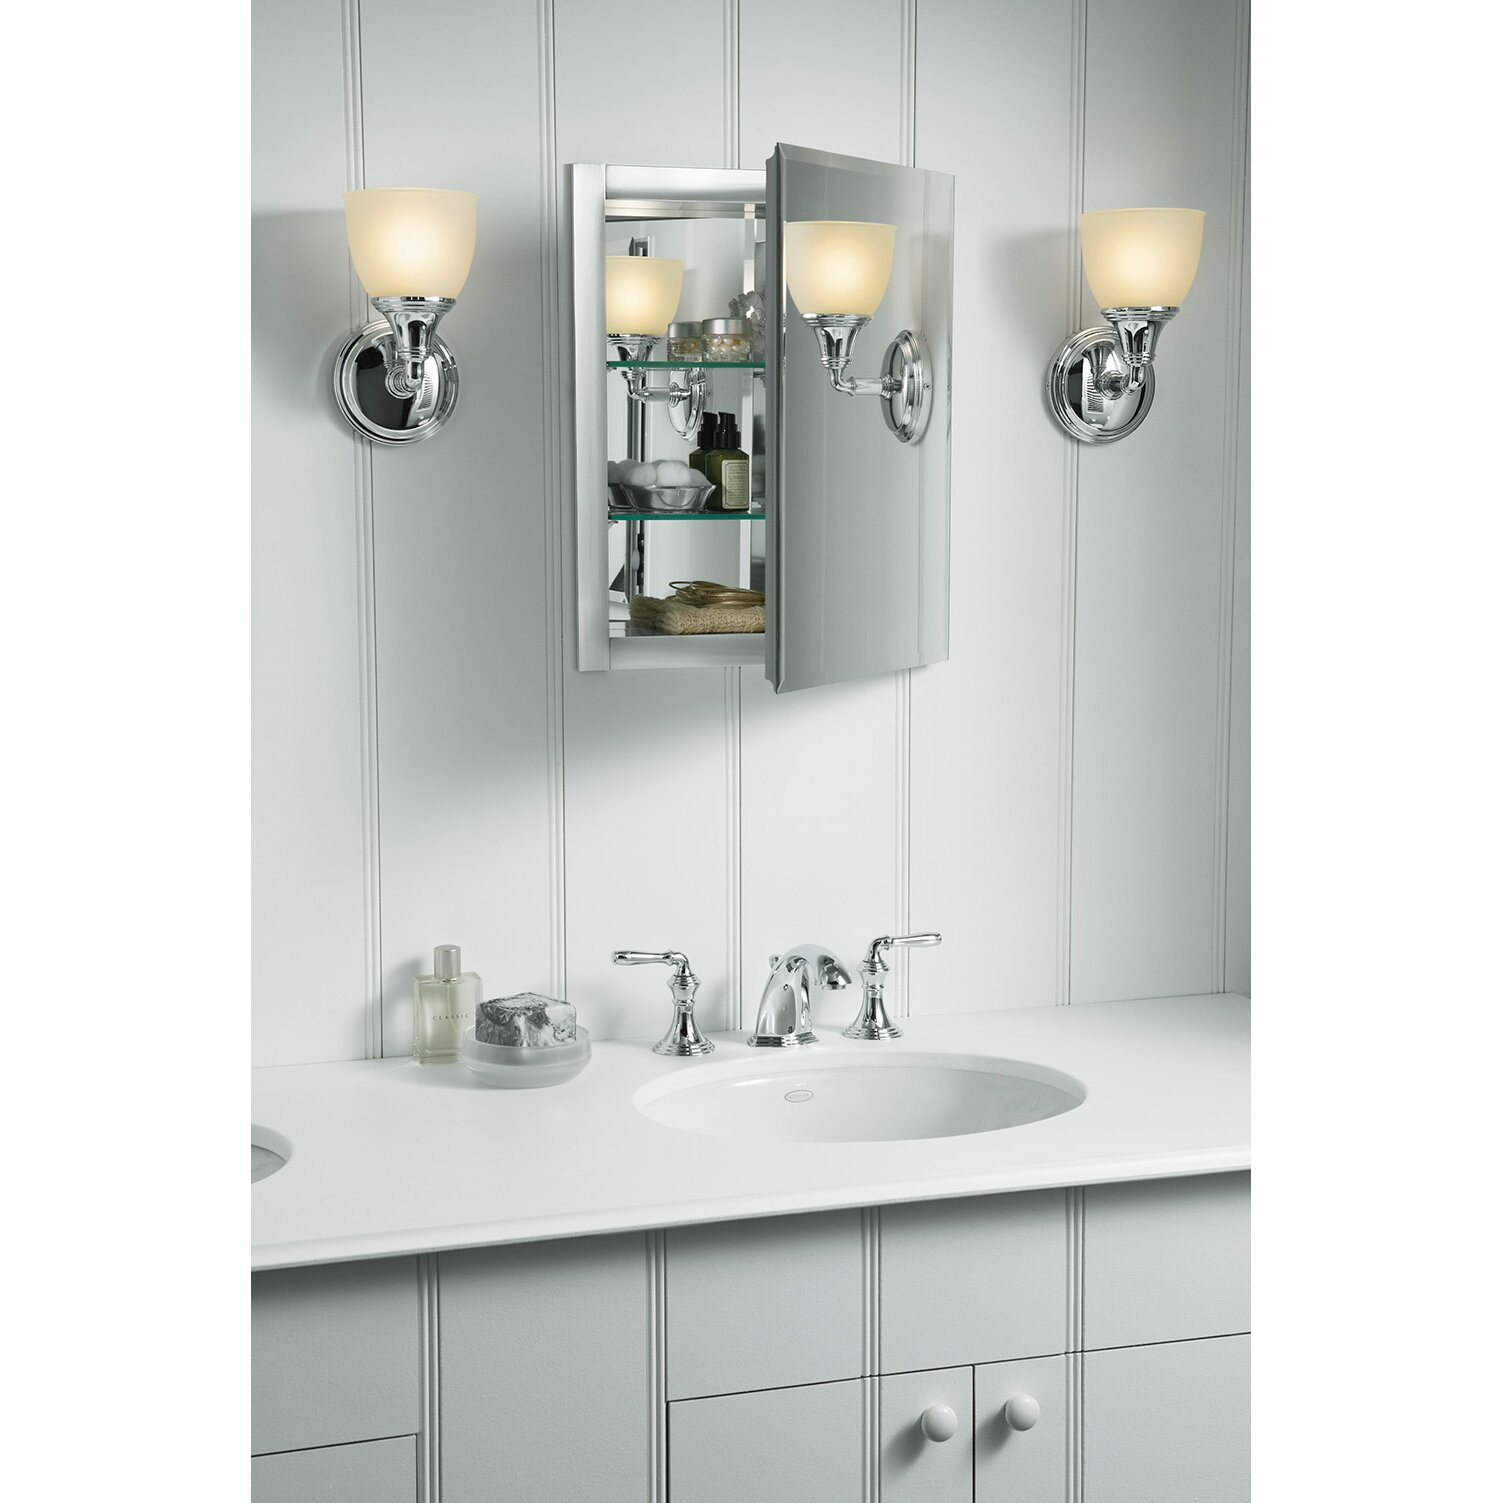 Kohler Bathroom Mirror Cabinet
 Kohler 16" x 20" Aluminum Mirrored Medicine Cabinet